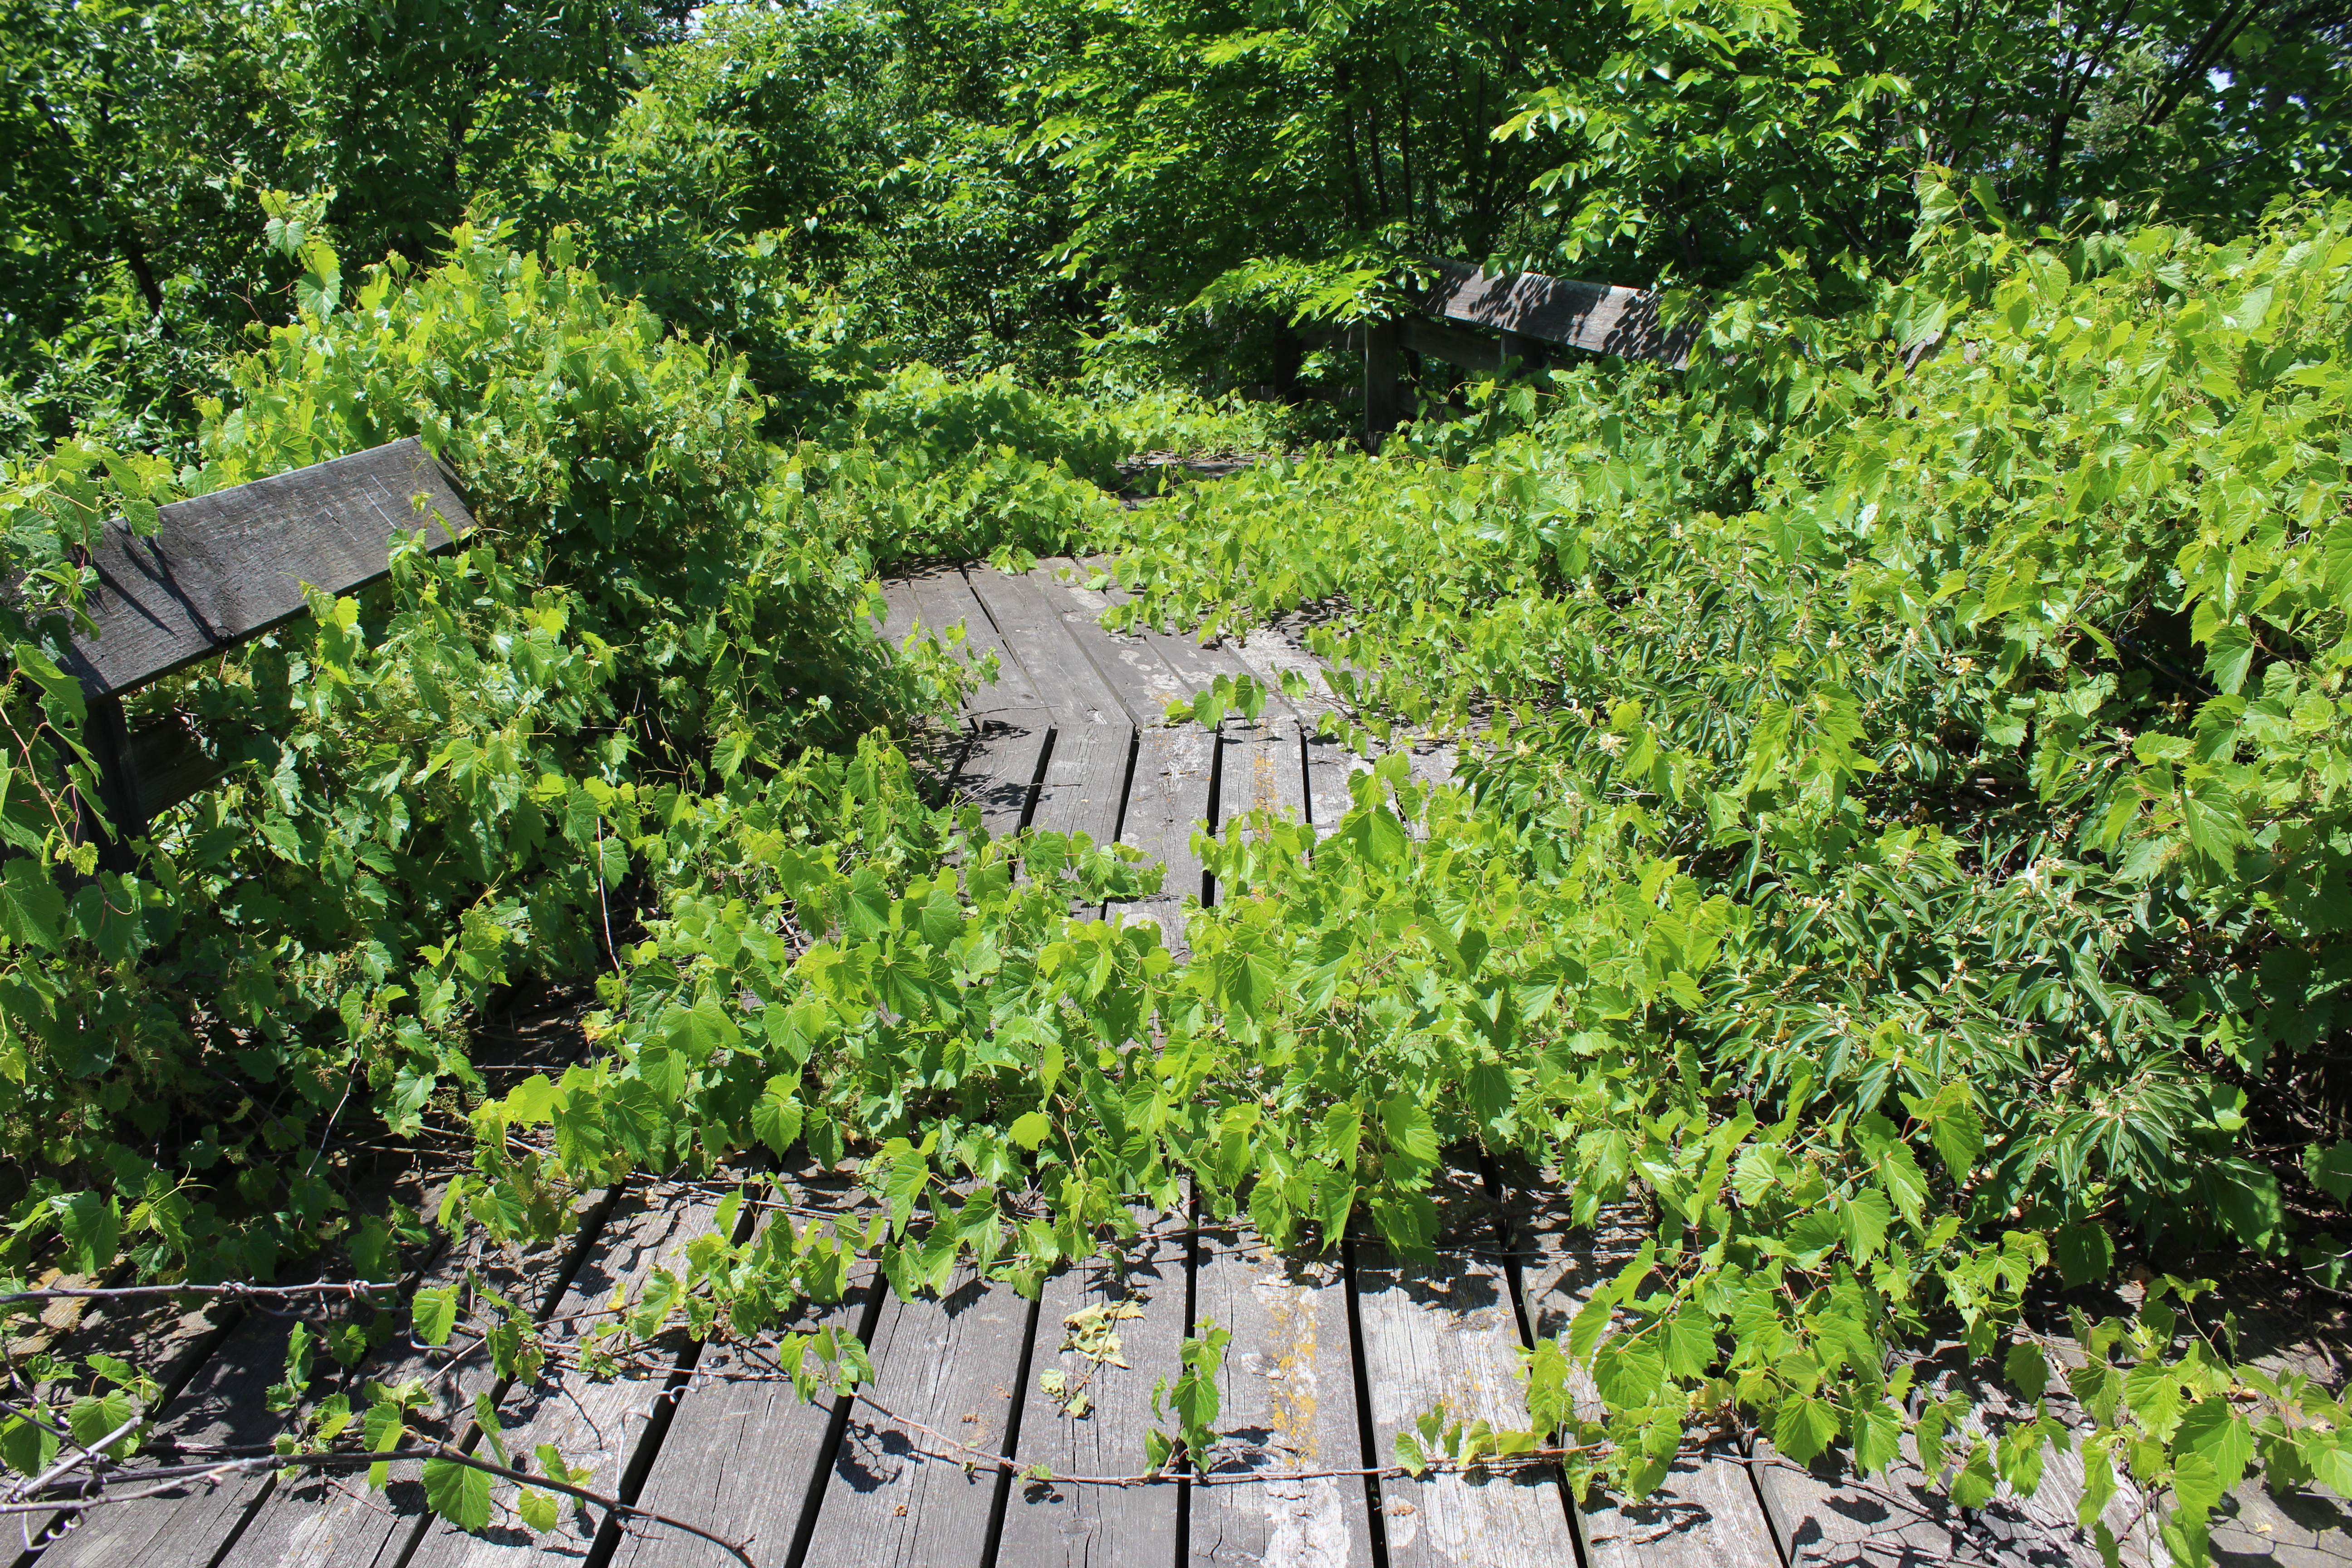 Wooden walkway overgrown with weeds at Belle Isle Zoo